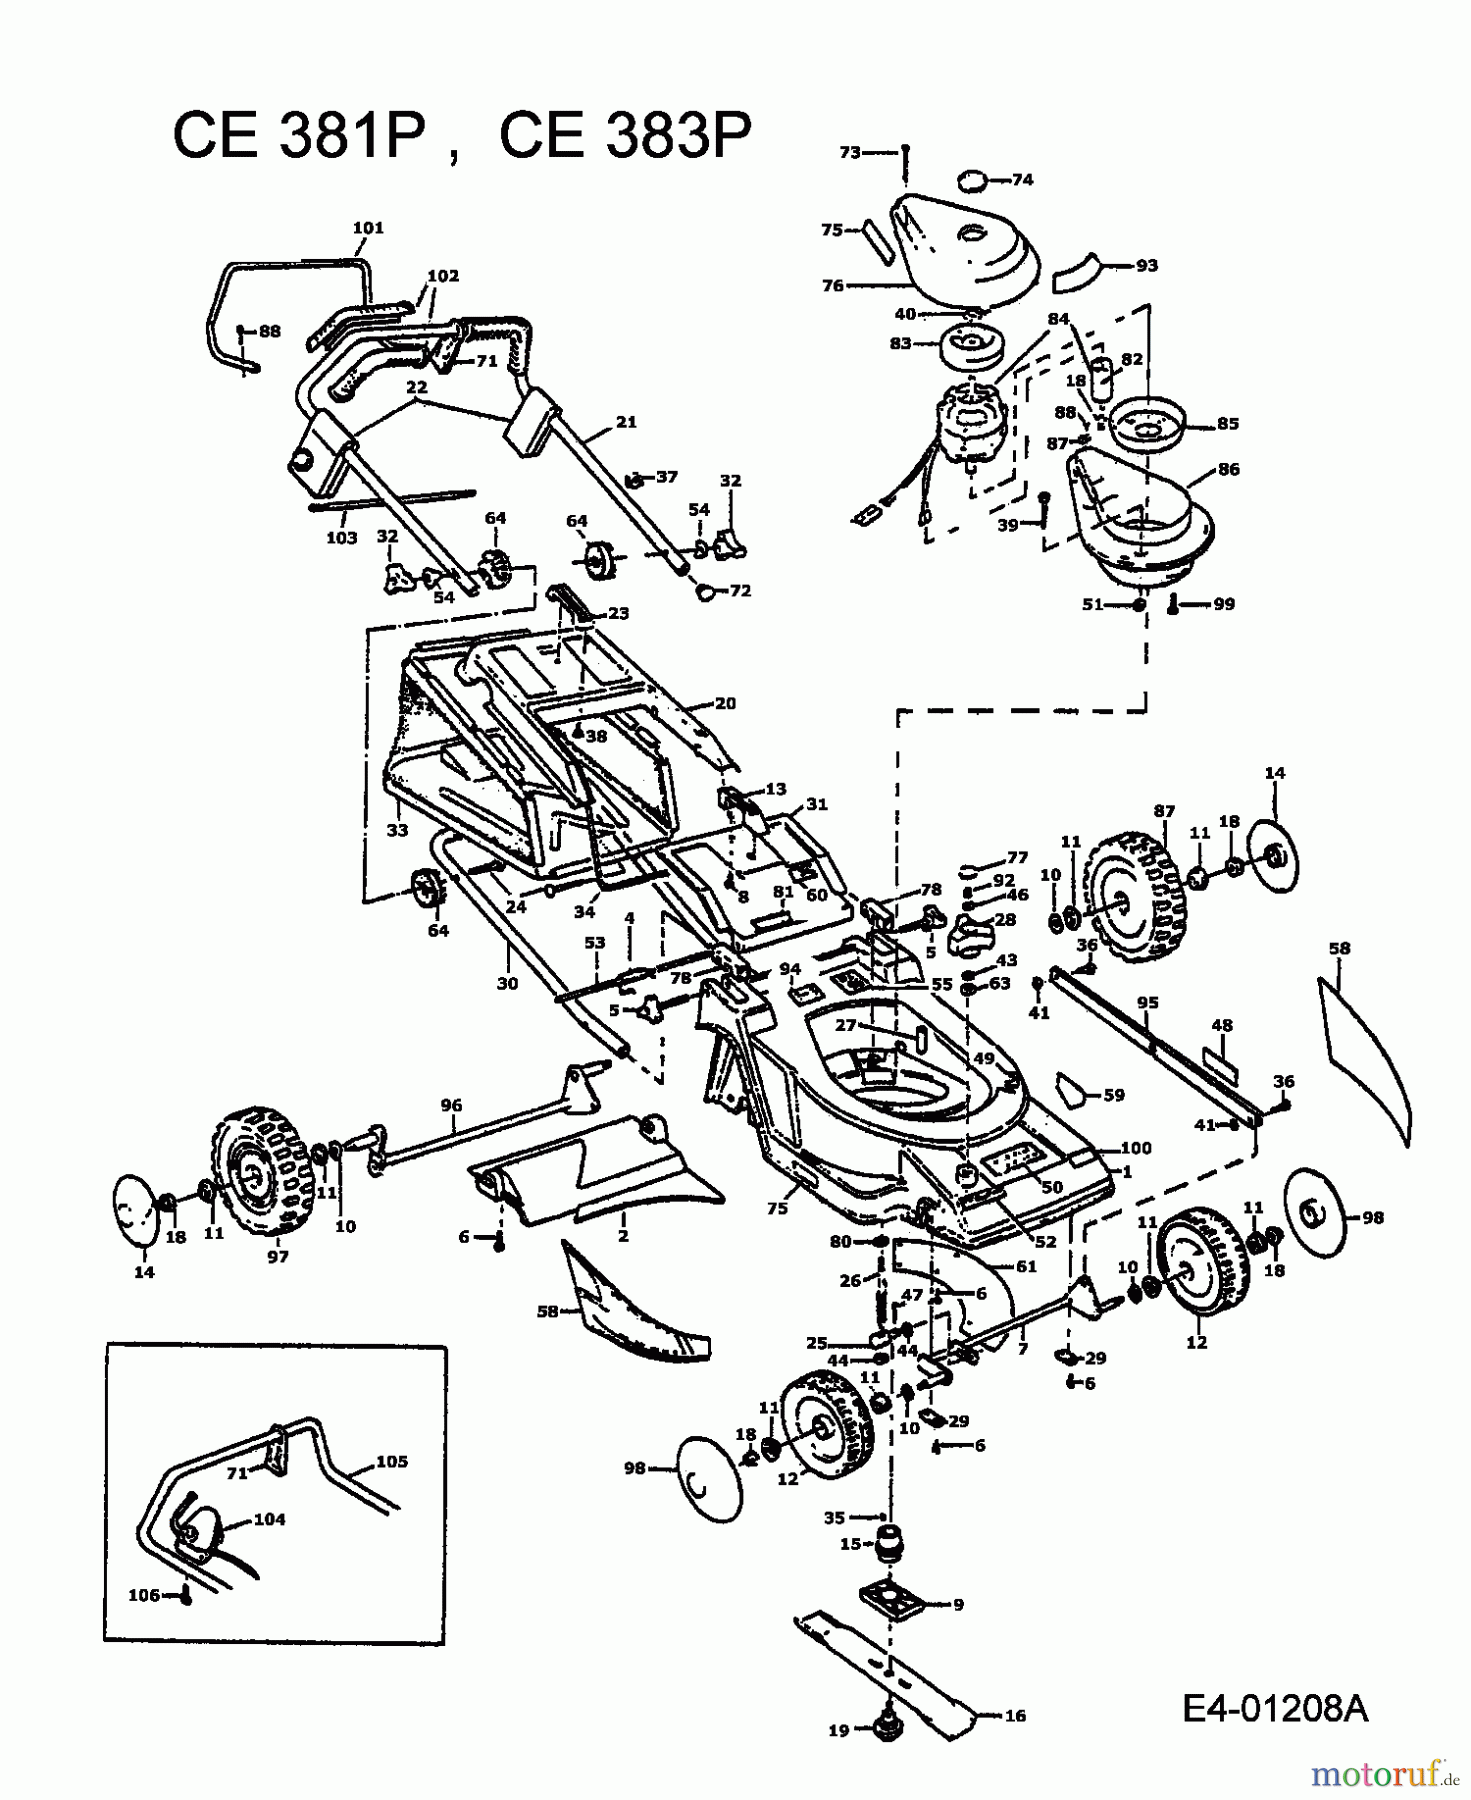  MTD Electric mower CE 383 P 901E384P001  (1994) Basic machine